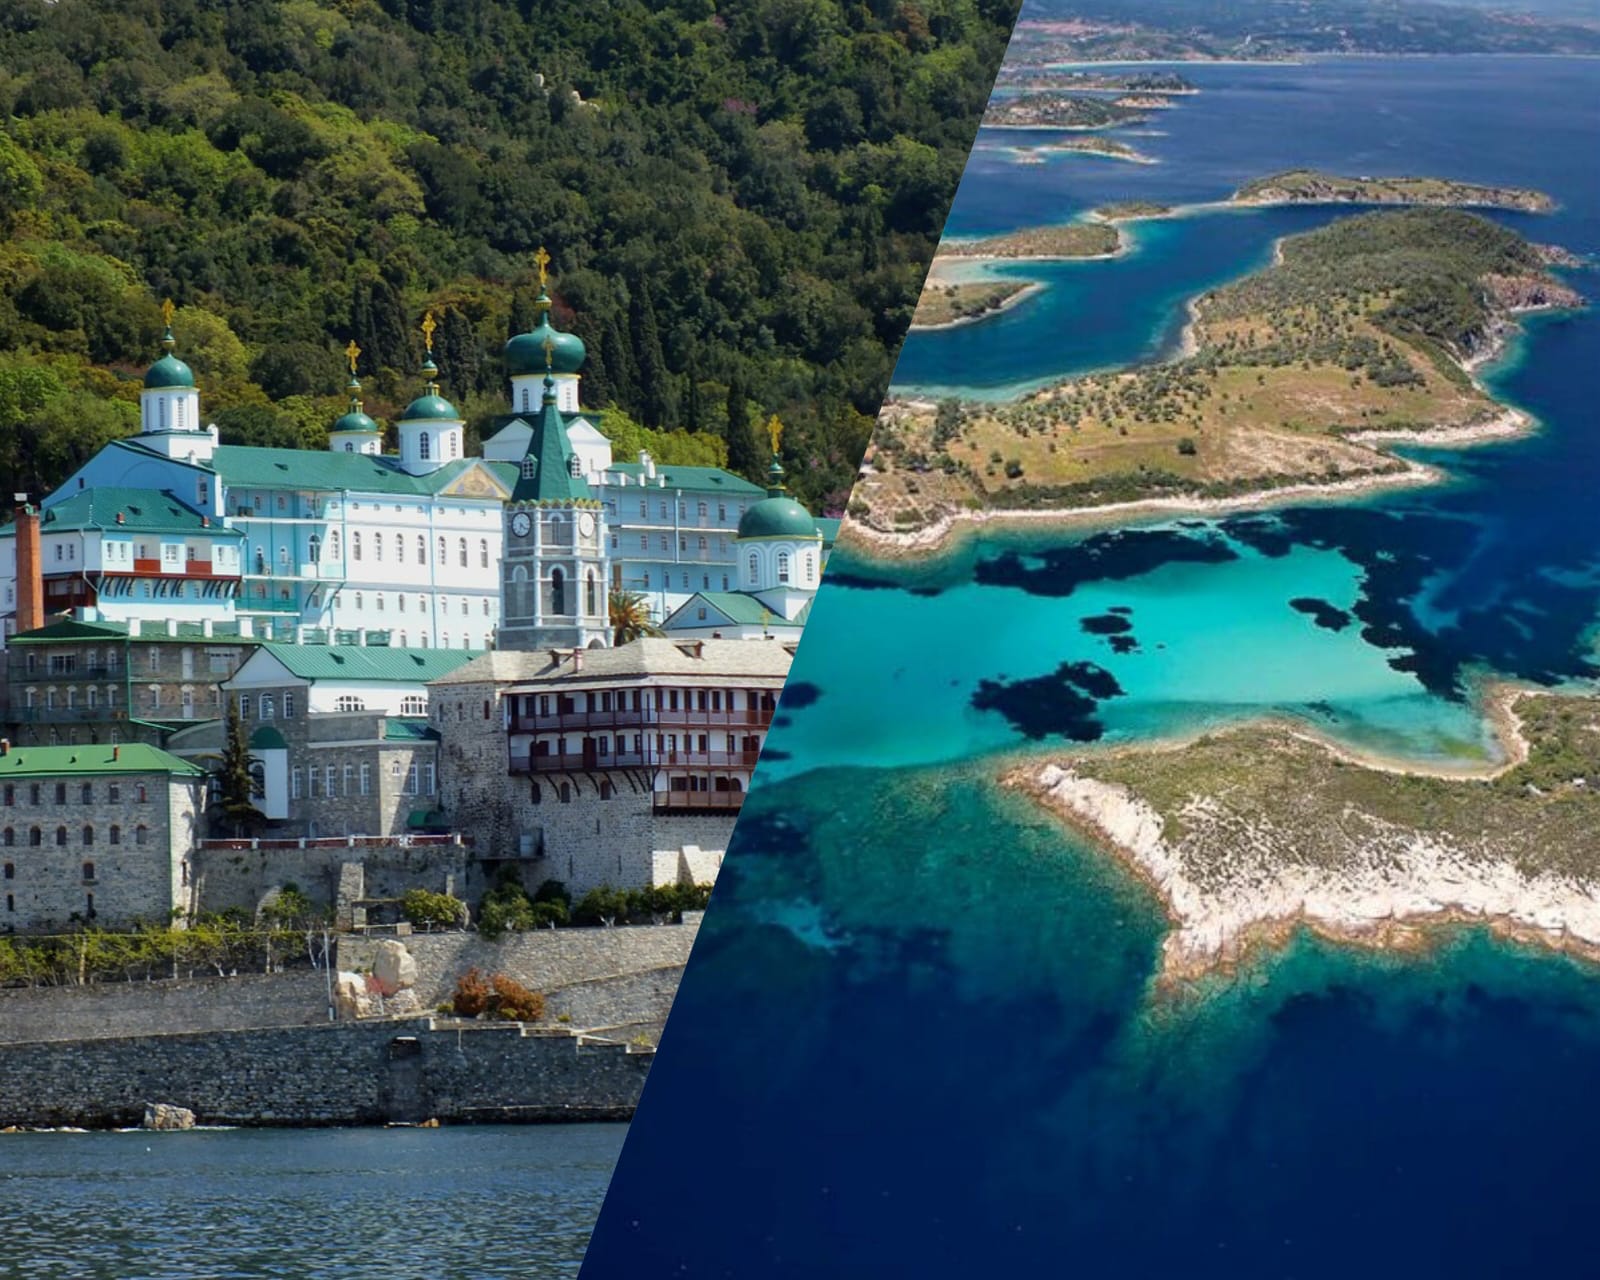 COMBO cruise: Mount Athos (4 monasteries) & Blue lagoon departing from Ormos Panagias